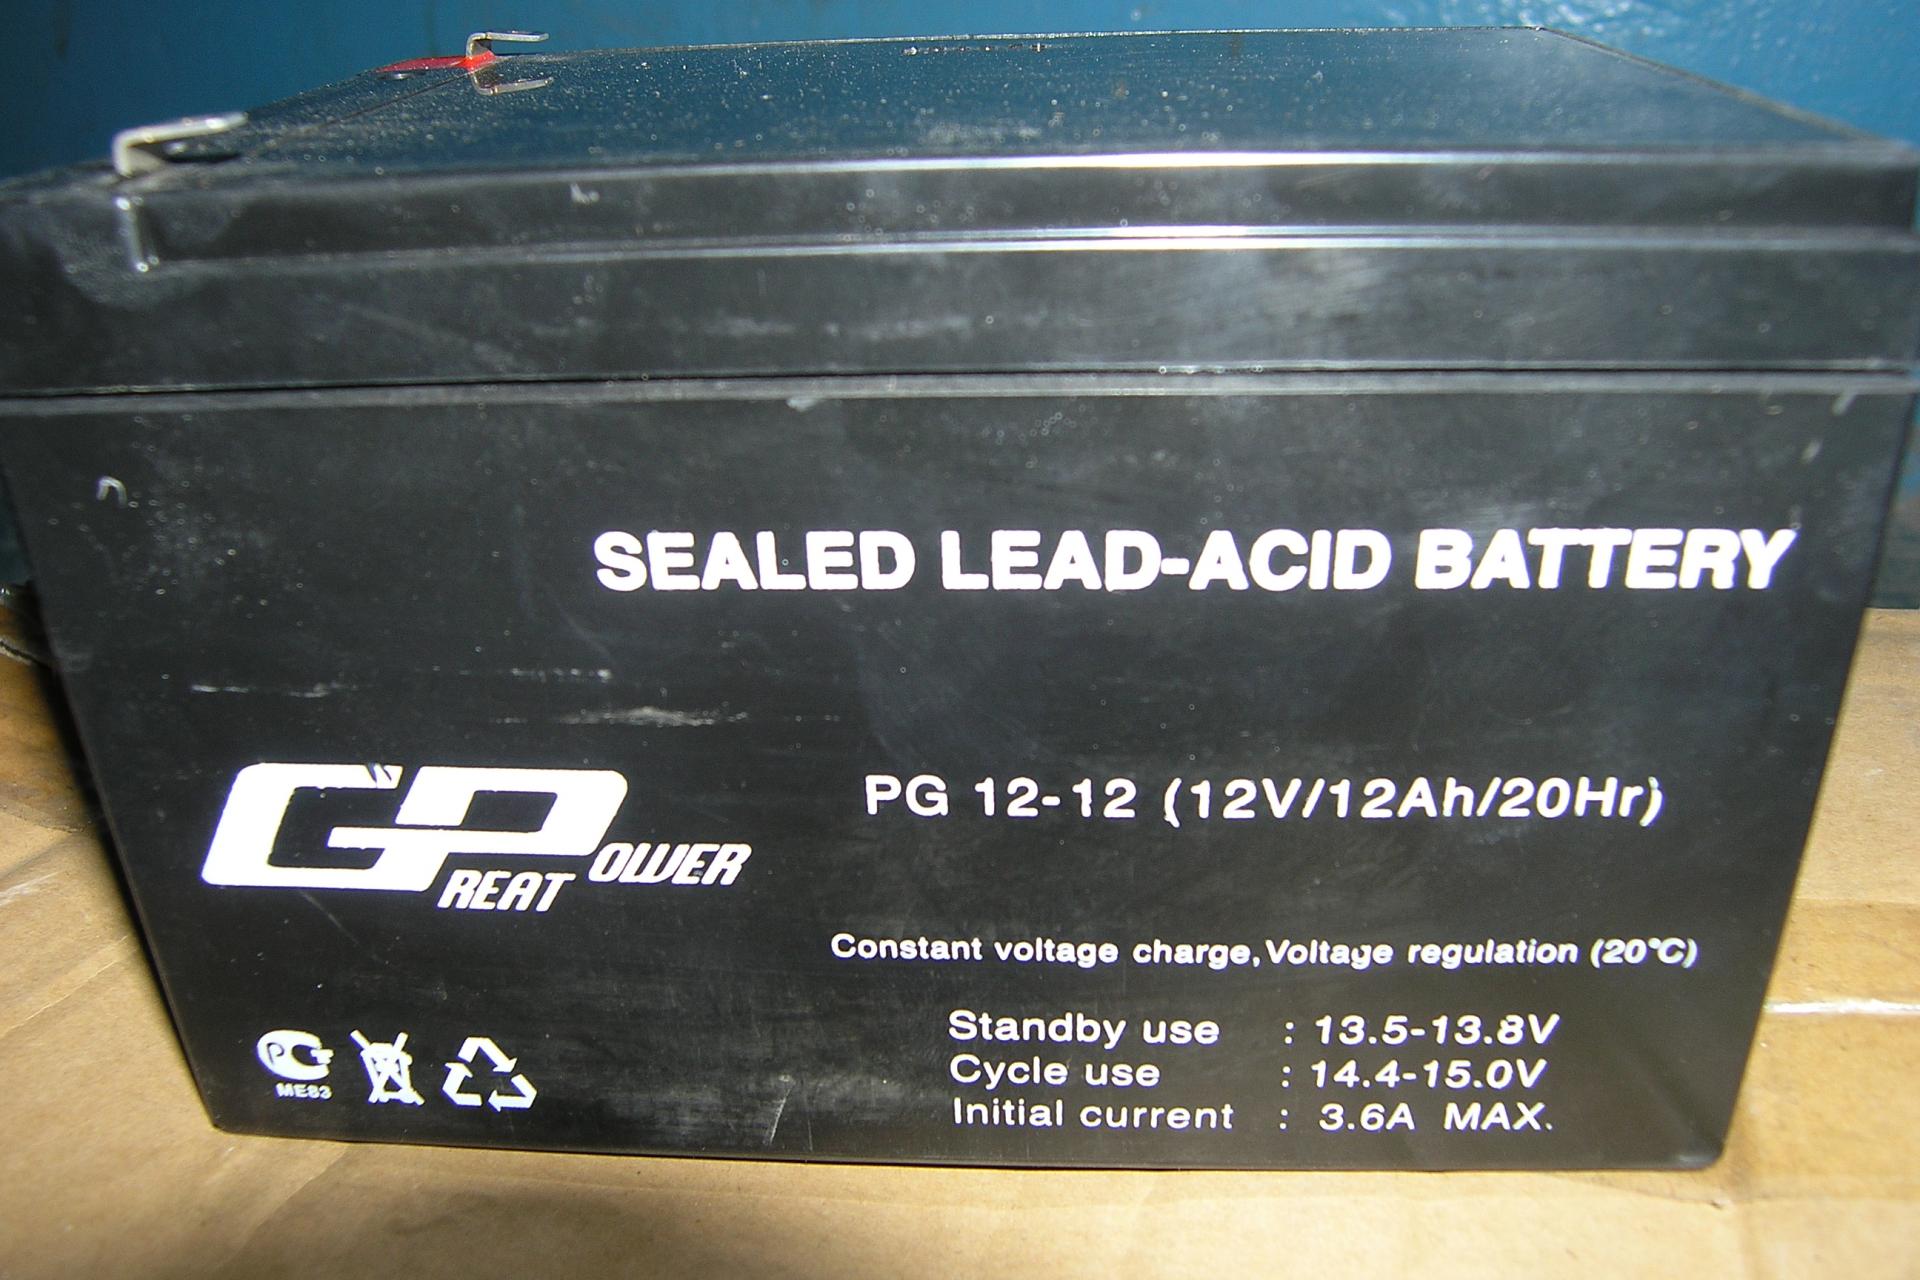 Sealed lead battery. Аккумуляторная батарея Power great PG 12-7.2. Аккумуляторы типа «Sealed lead-acid Battery «pg12-12» (12v/12ah/20hr). Sealed lead-acid Battery 12v 100ah 20hr артикул. Sealed lead-acid Battery 12v PG 12.